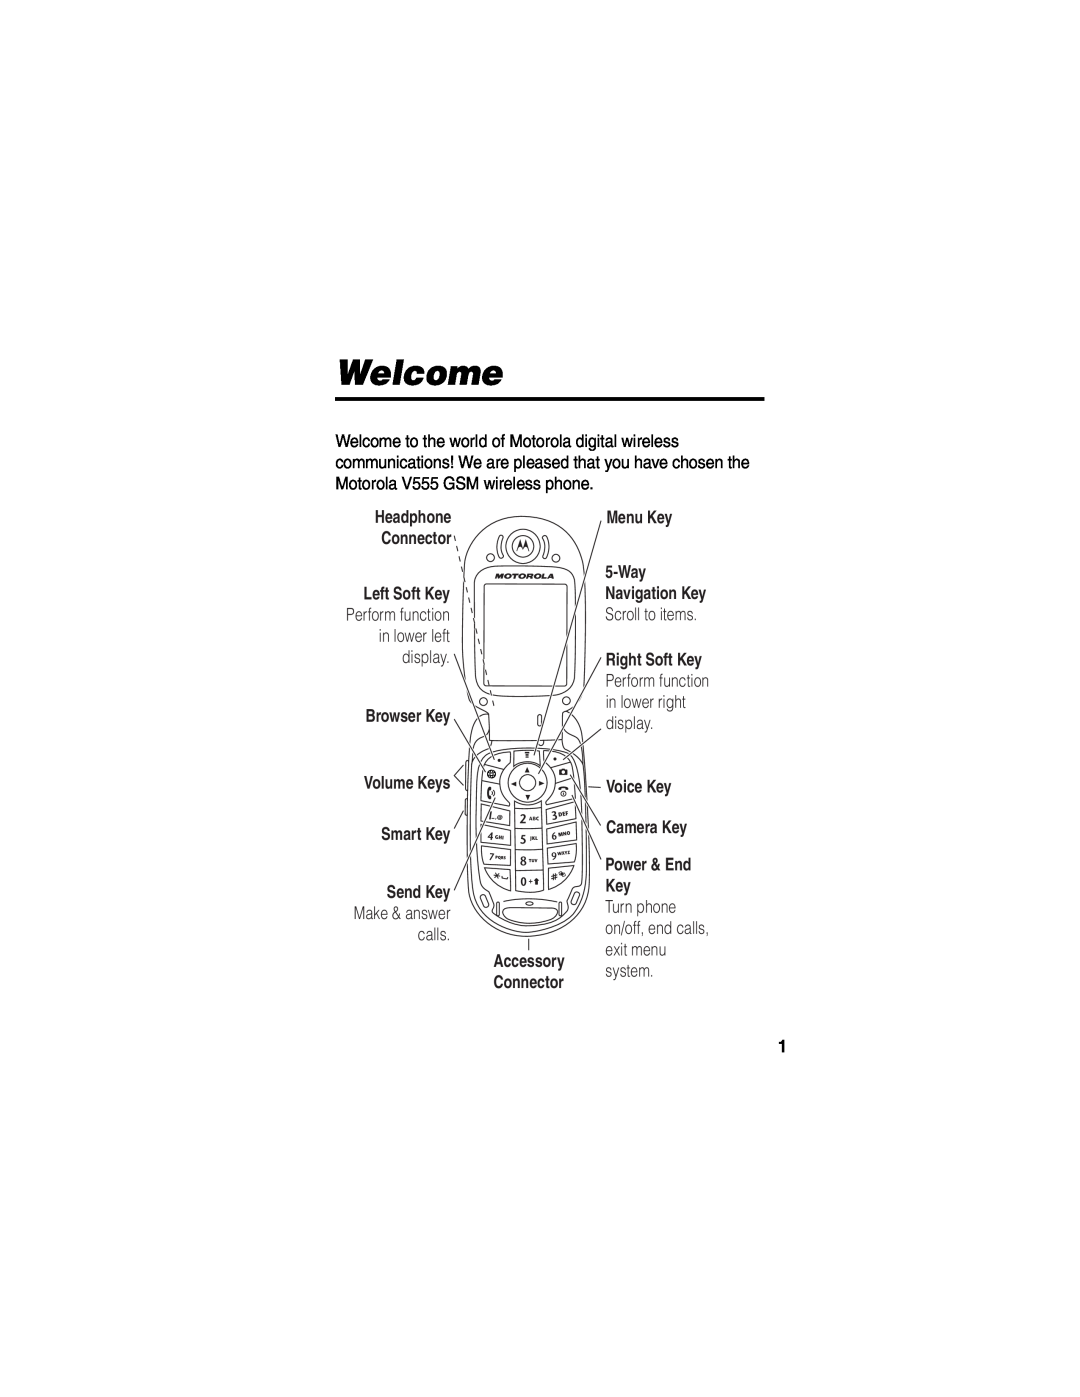 Motorola V555 manual Welcome, Headphone Connector, Browser Key Volume Keys Smart Key Send Key Make & answer calls, 040488a 